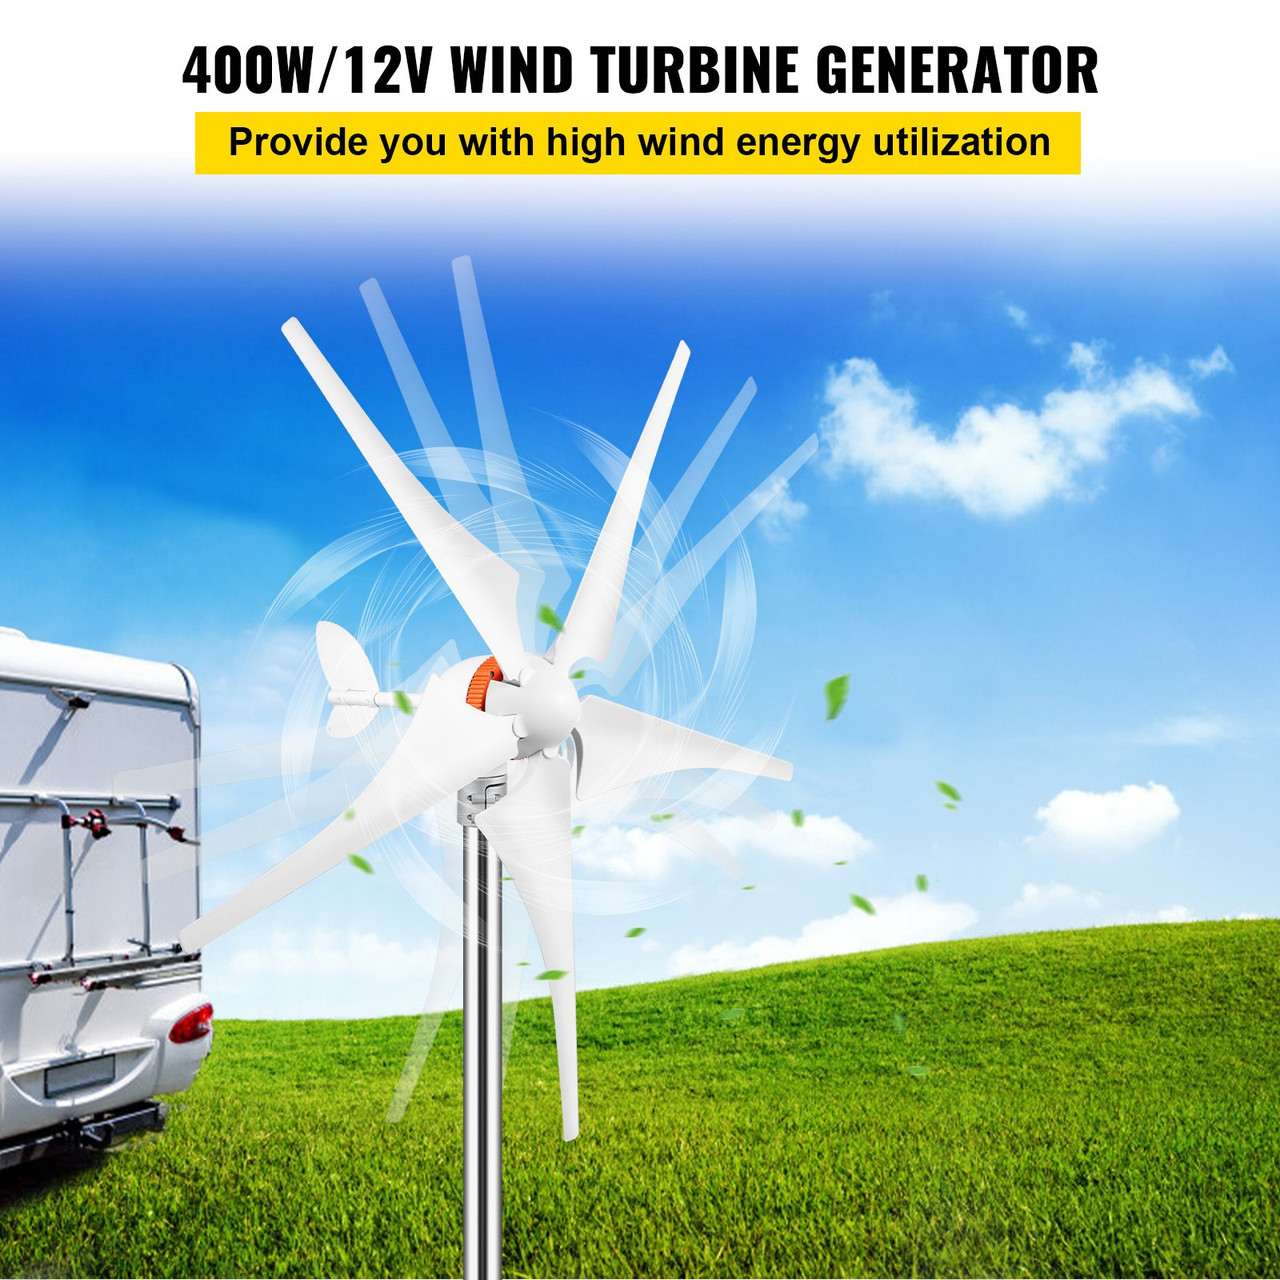 Wind Turbine Generator, 12V/AC Wind Turbine Kit, 400W Wind Power Generator with MPPT Controller 5 Blades Auto Adjust Windward Direction Suitable for Terrace, Marine, Motor Home, Chalet, Boat